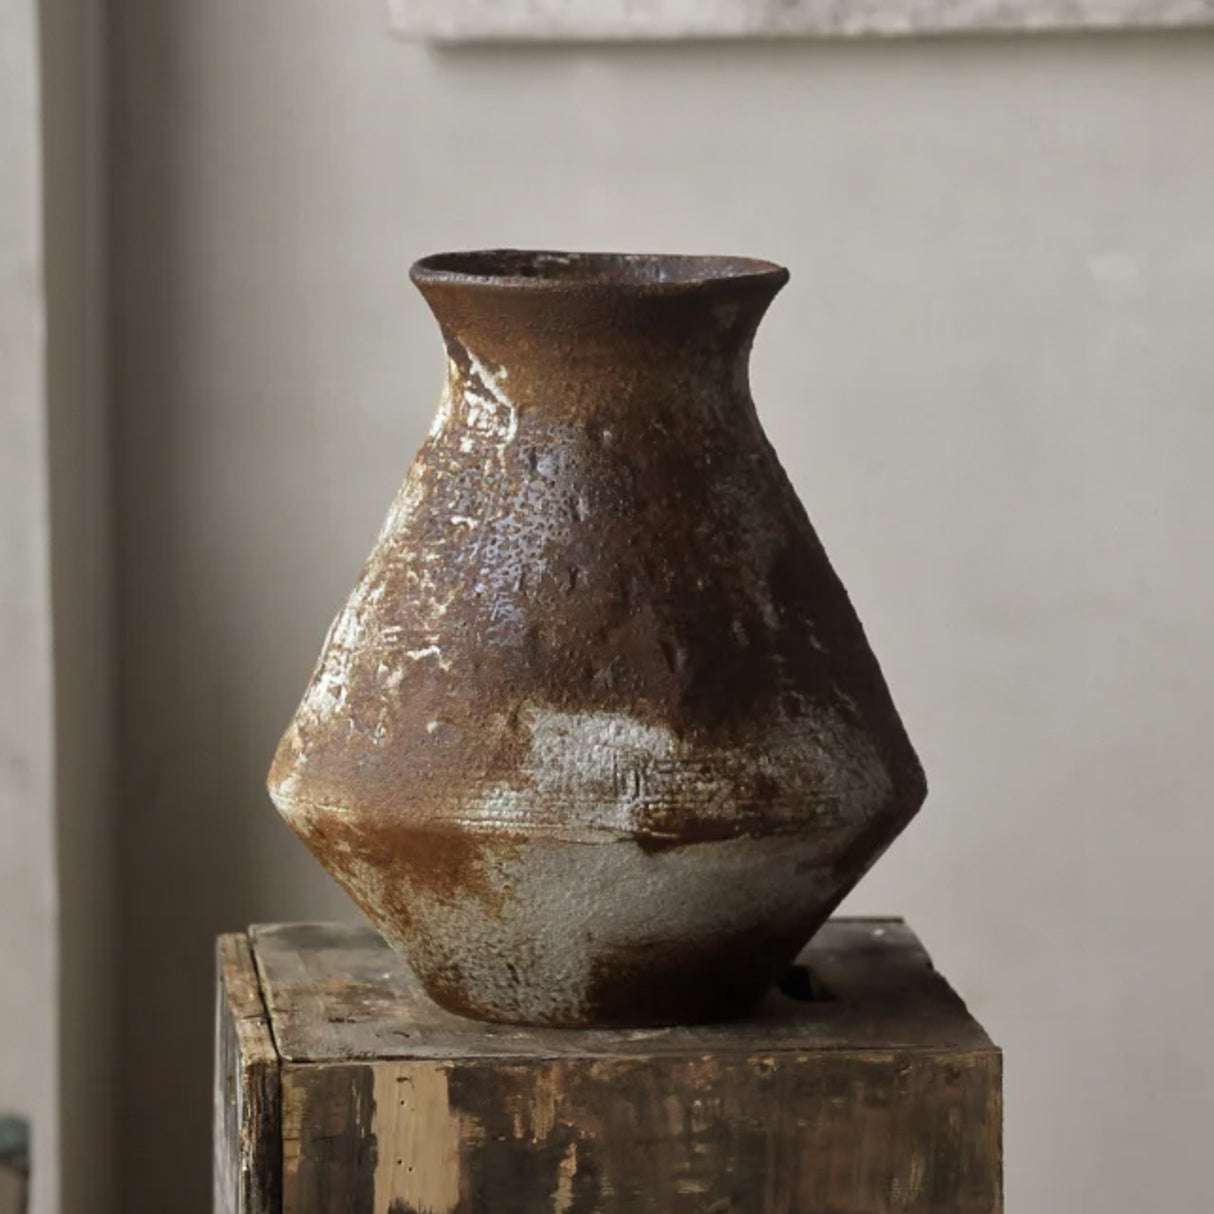 Very old style Japanese vase